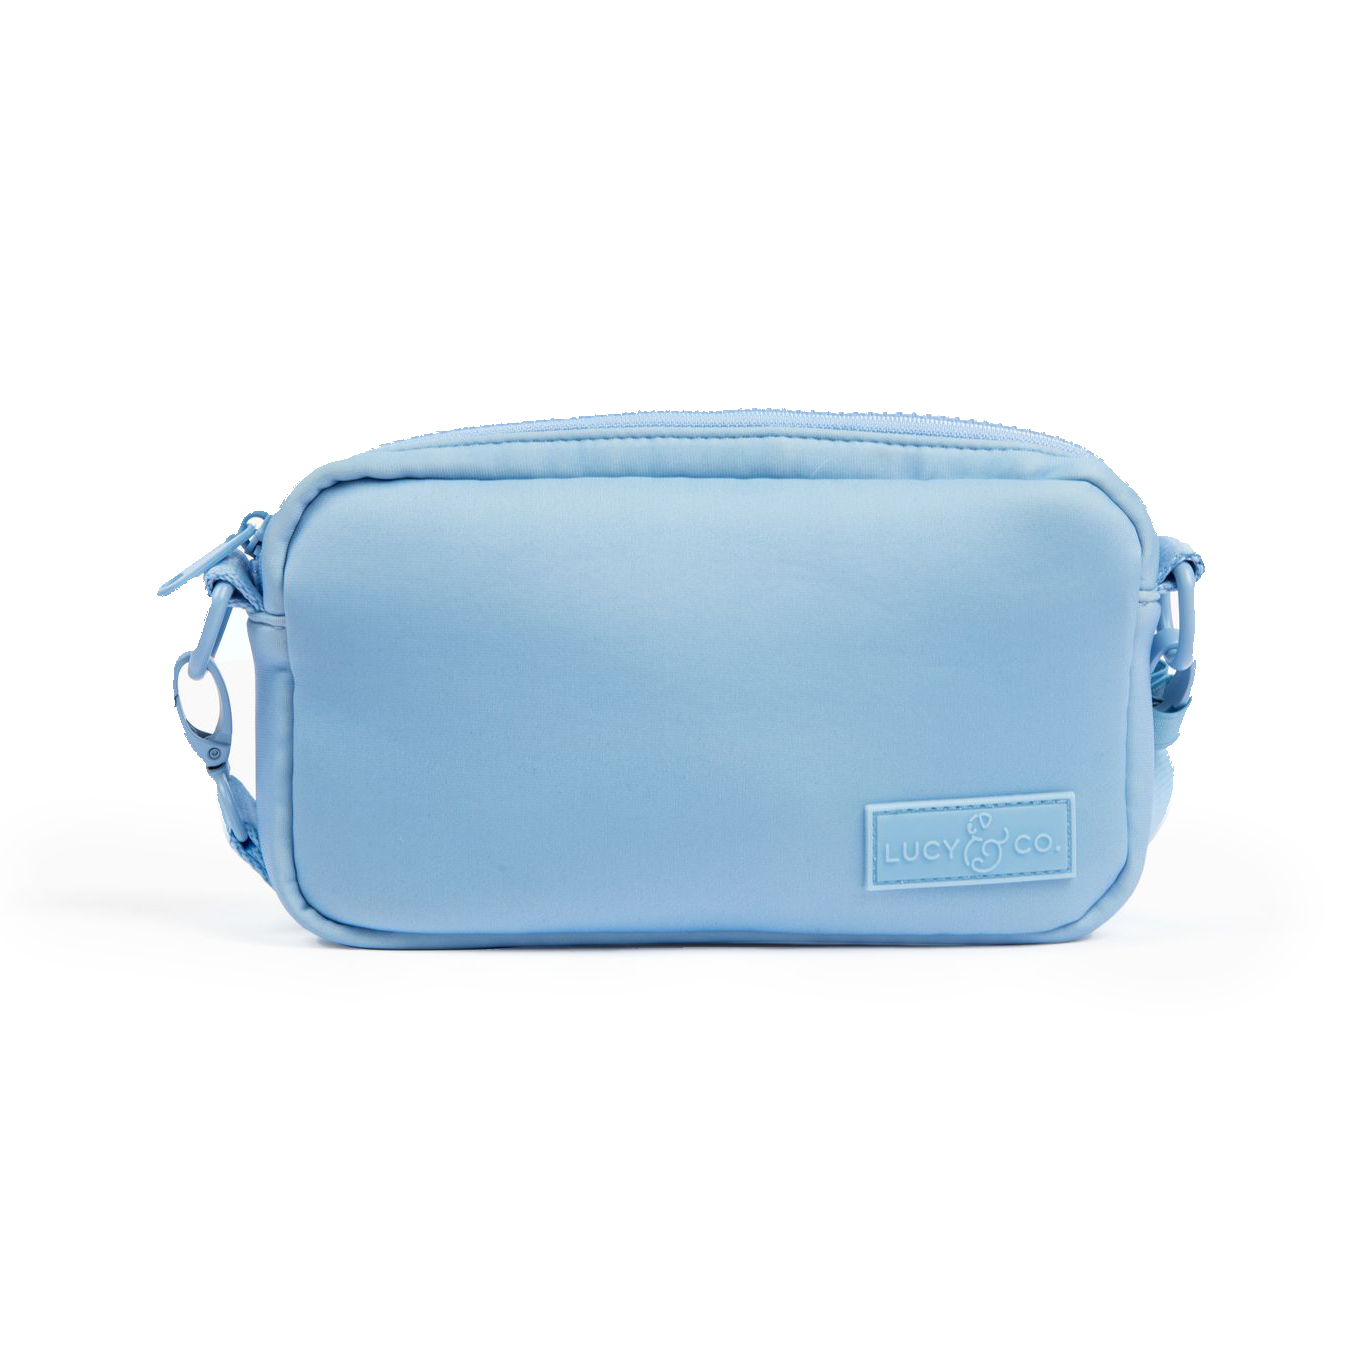 The Denim Blue Crossbody Bag